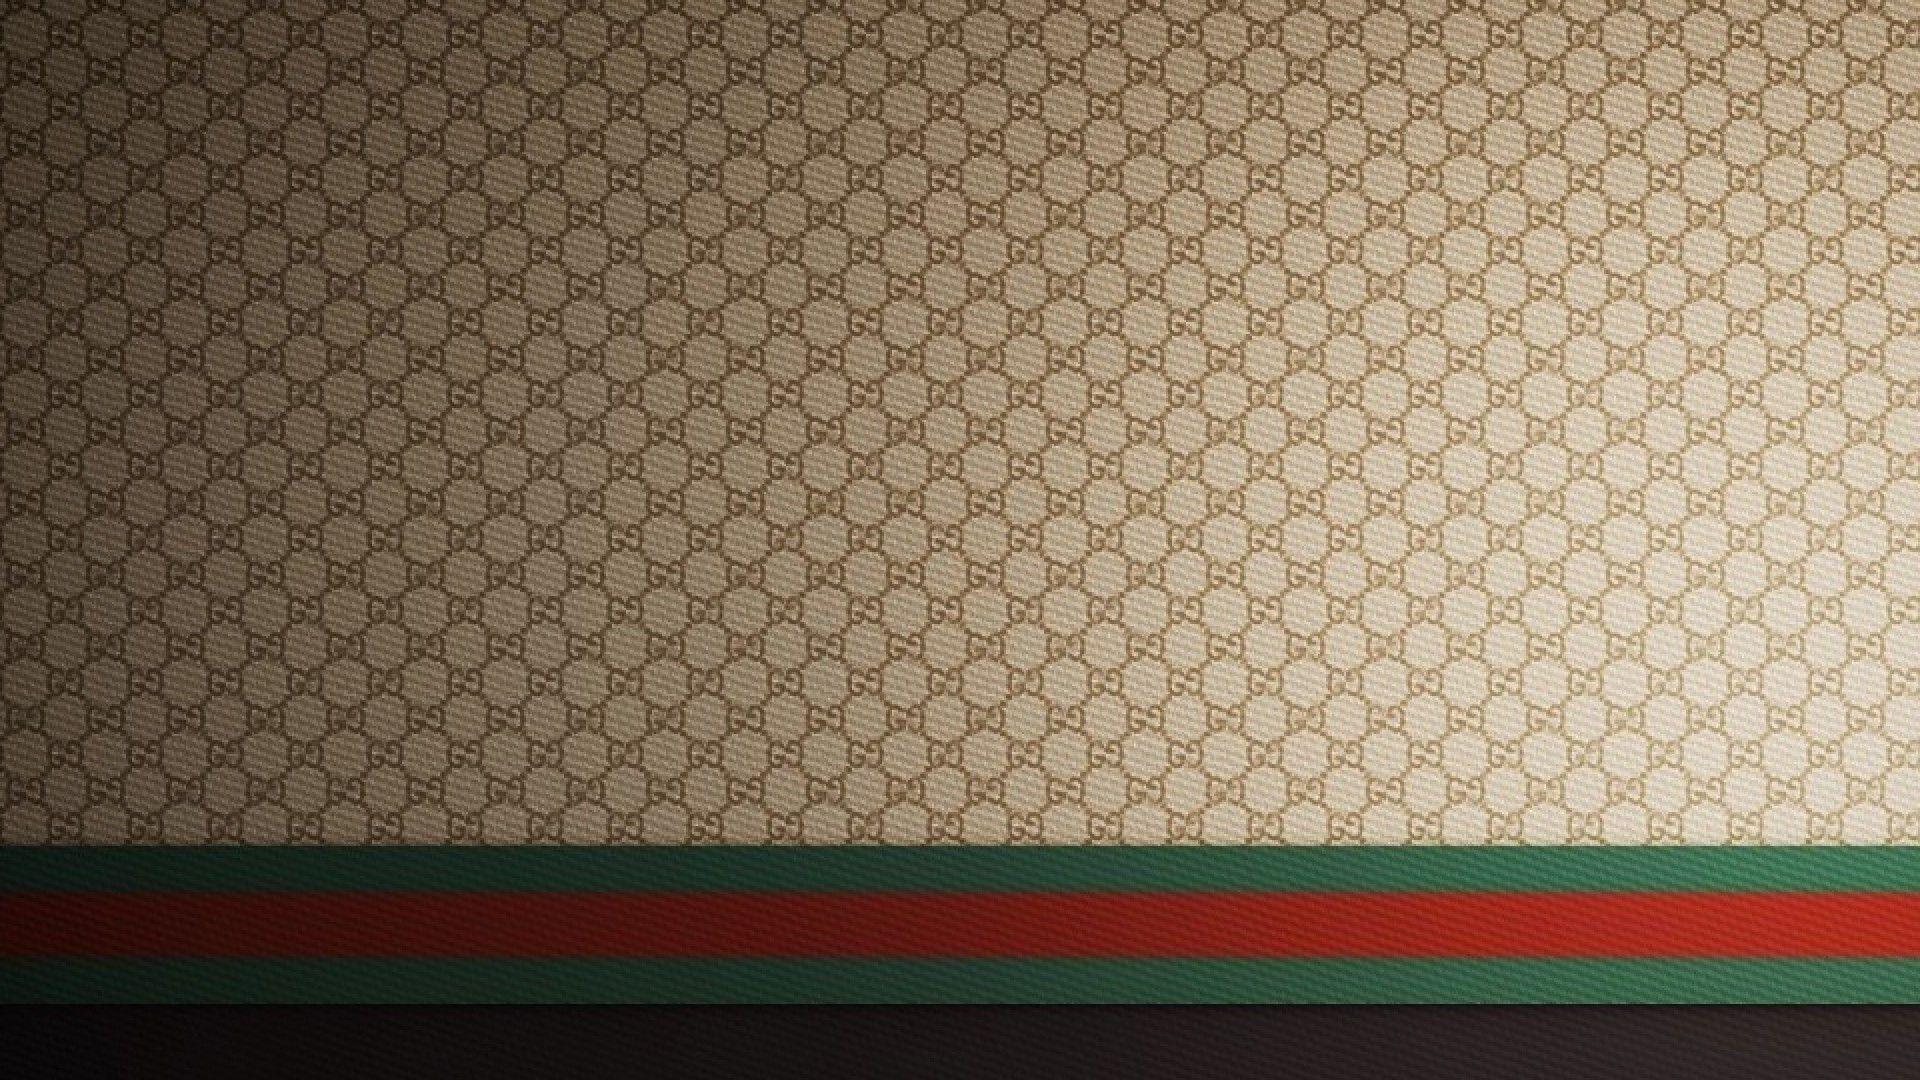 Gucci wallpaper HD free download. ♚Gucci in 2019